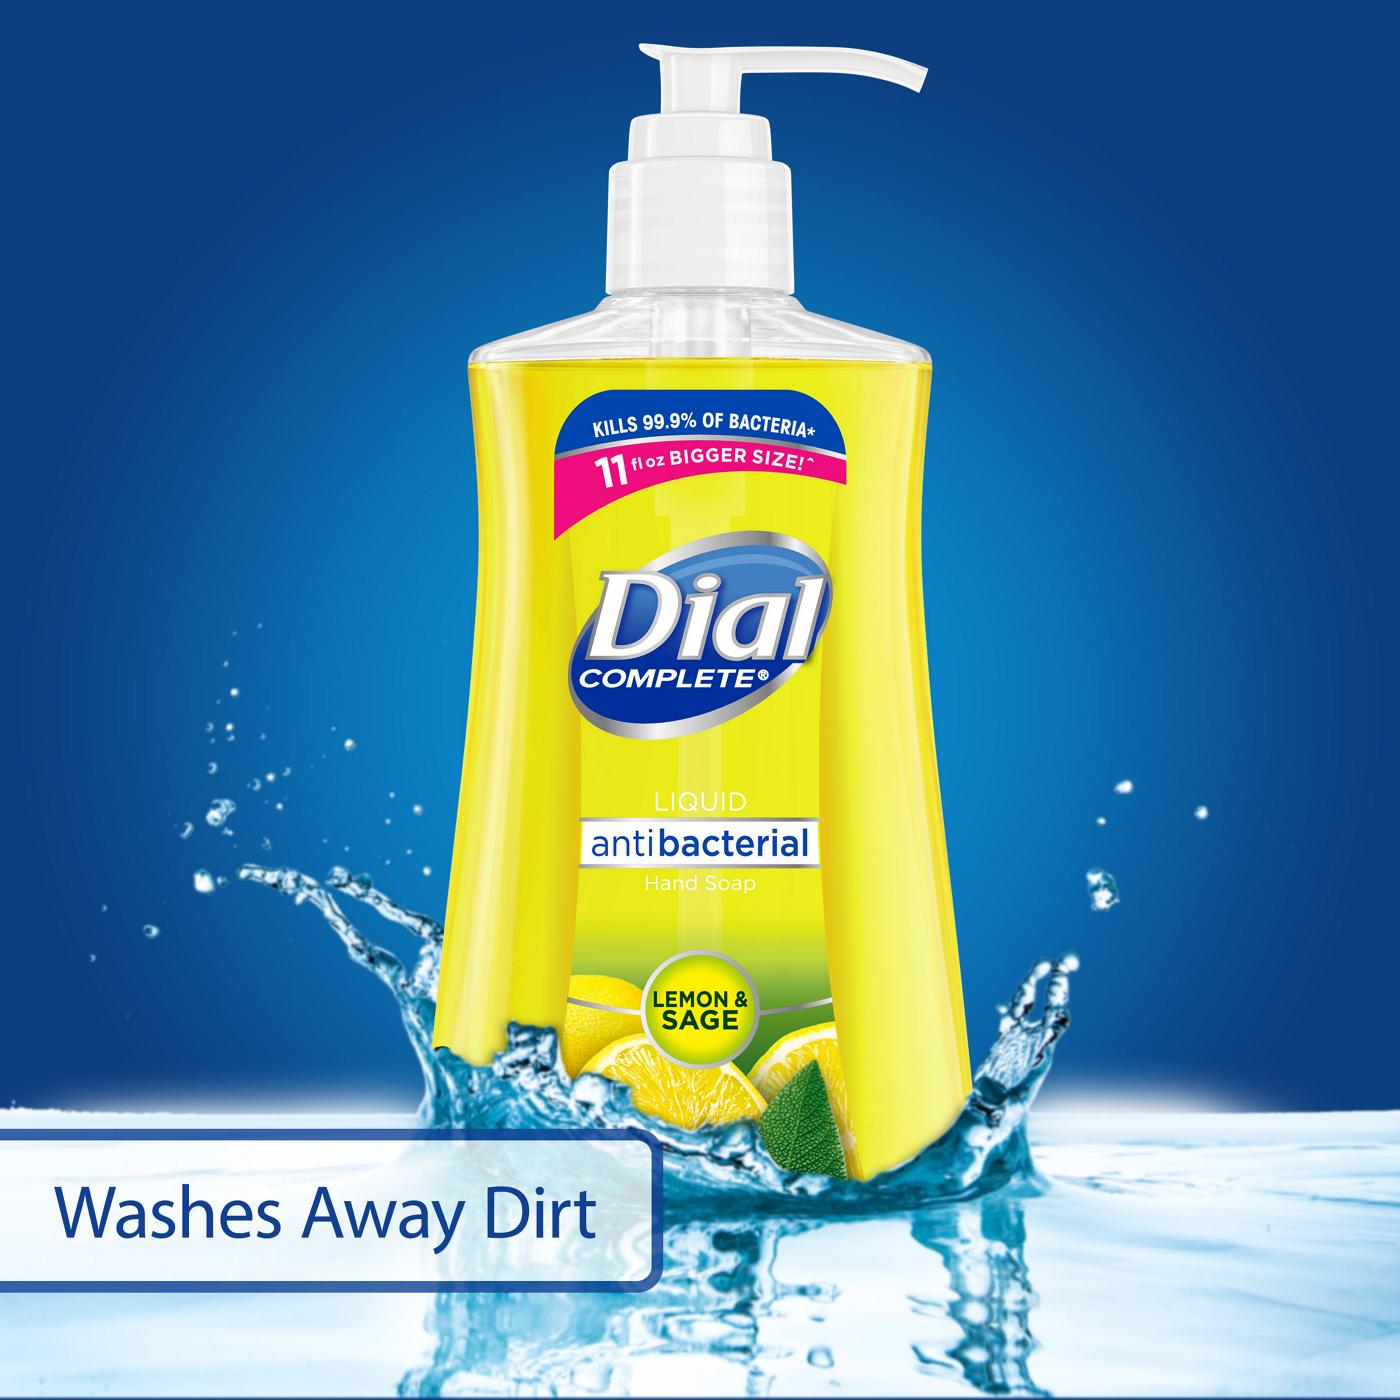 Dial Complete Antibacterial Liquid Hand Soap, Lemon & Sage; image 4 of 6